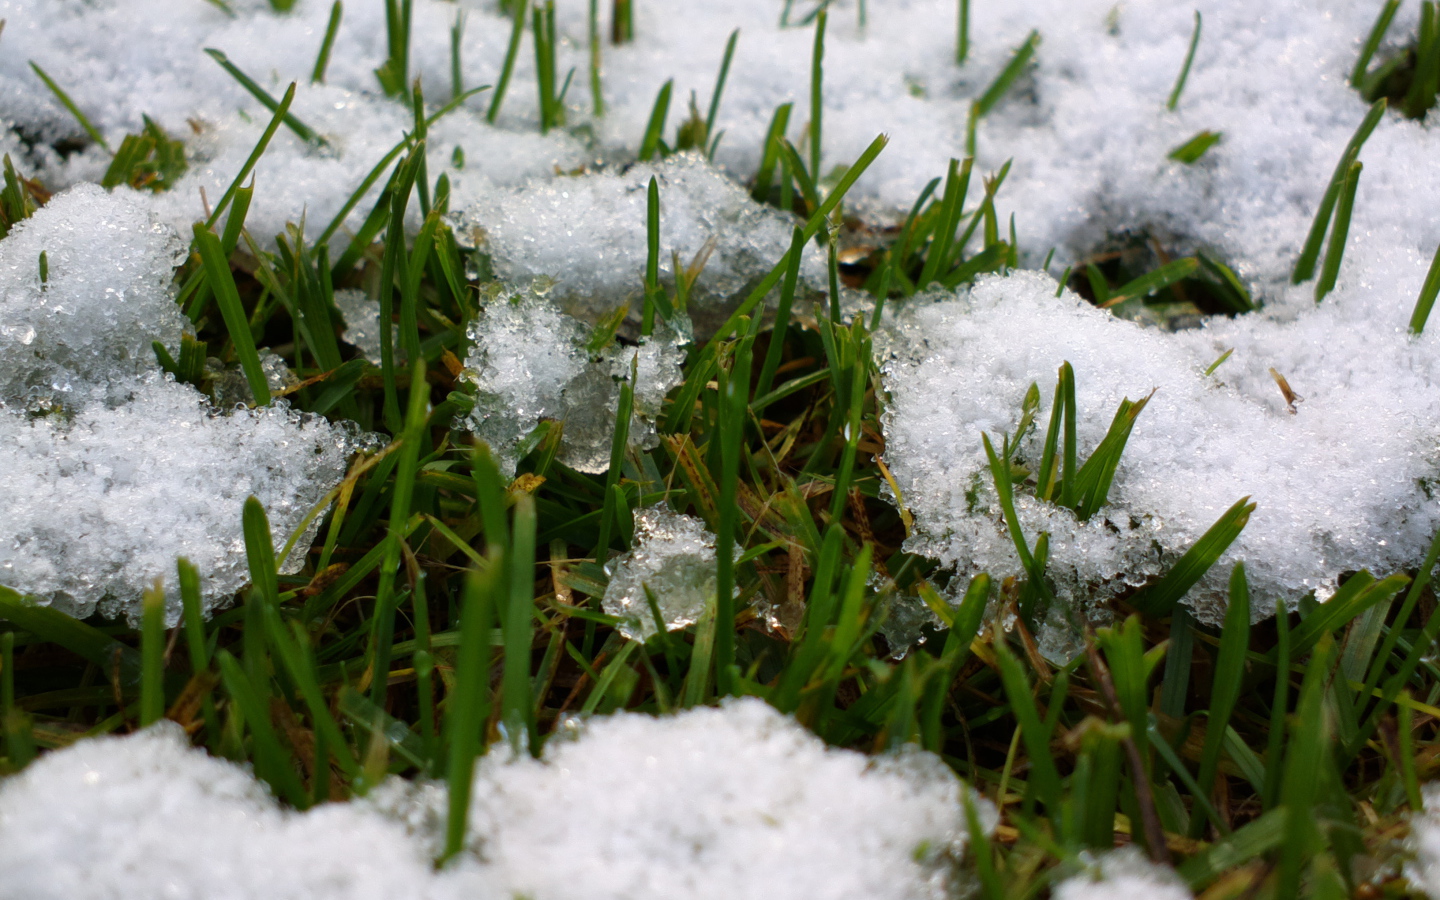 Весенняя травка из под снега